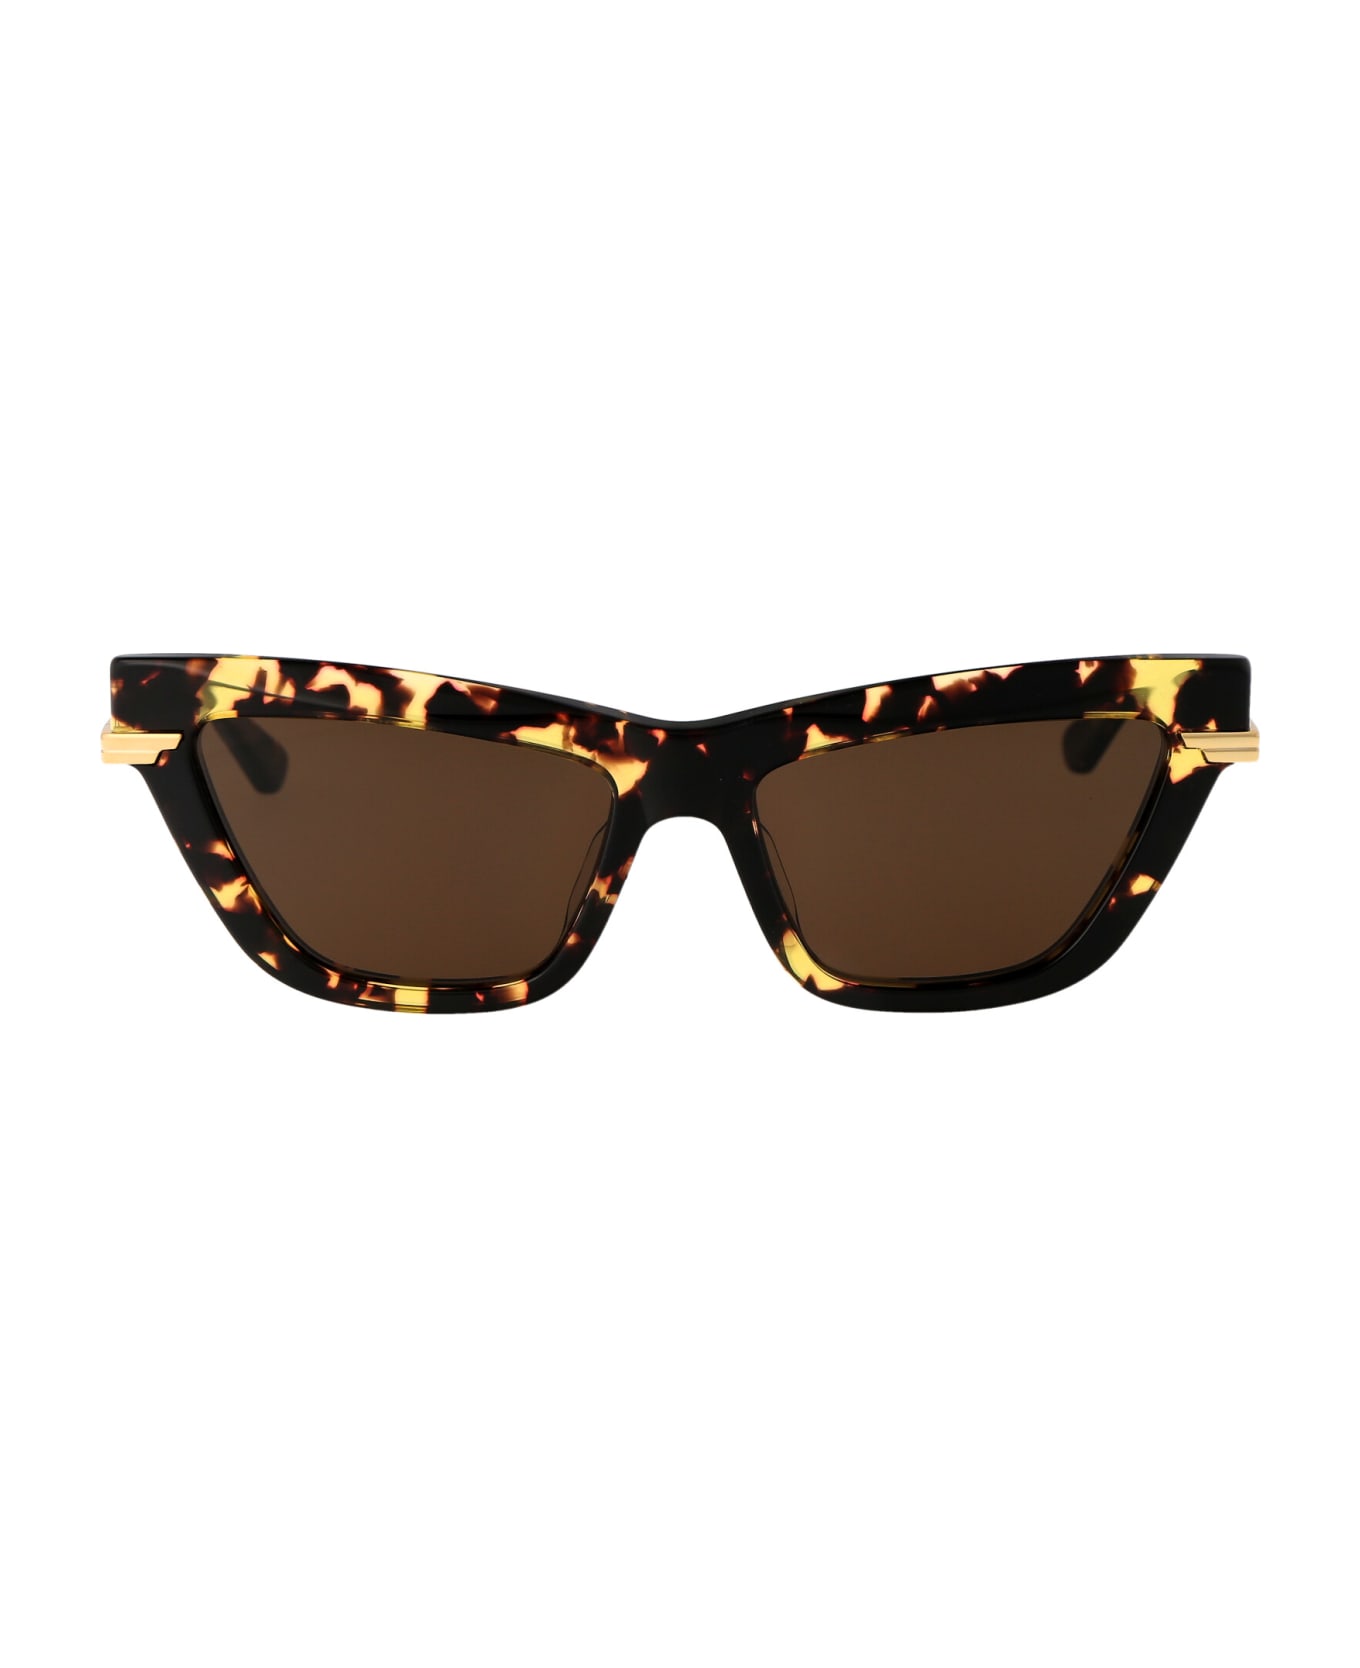 Bottega Veneta Eyewear Bv1241s Sunglasses - 002 HAVANA GOLD BROWN